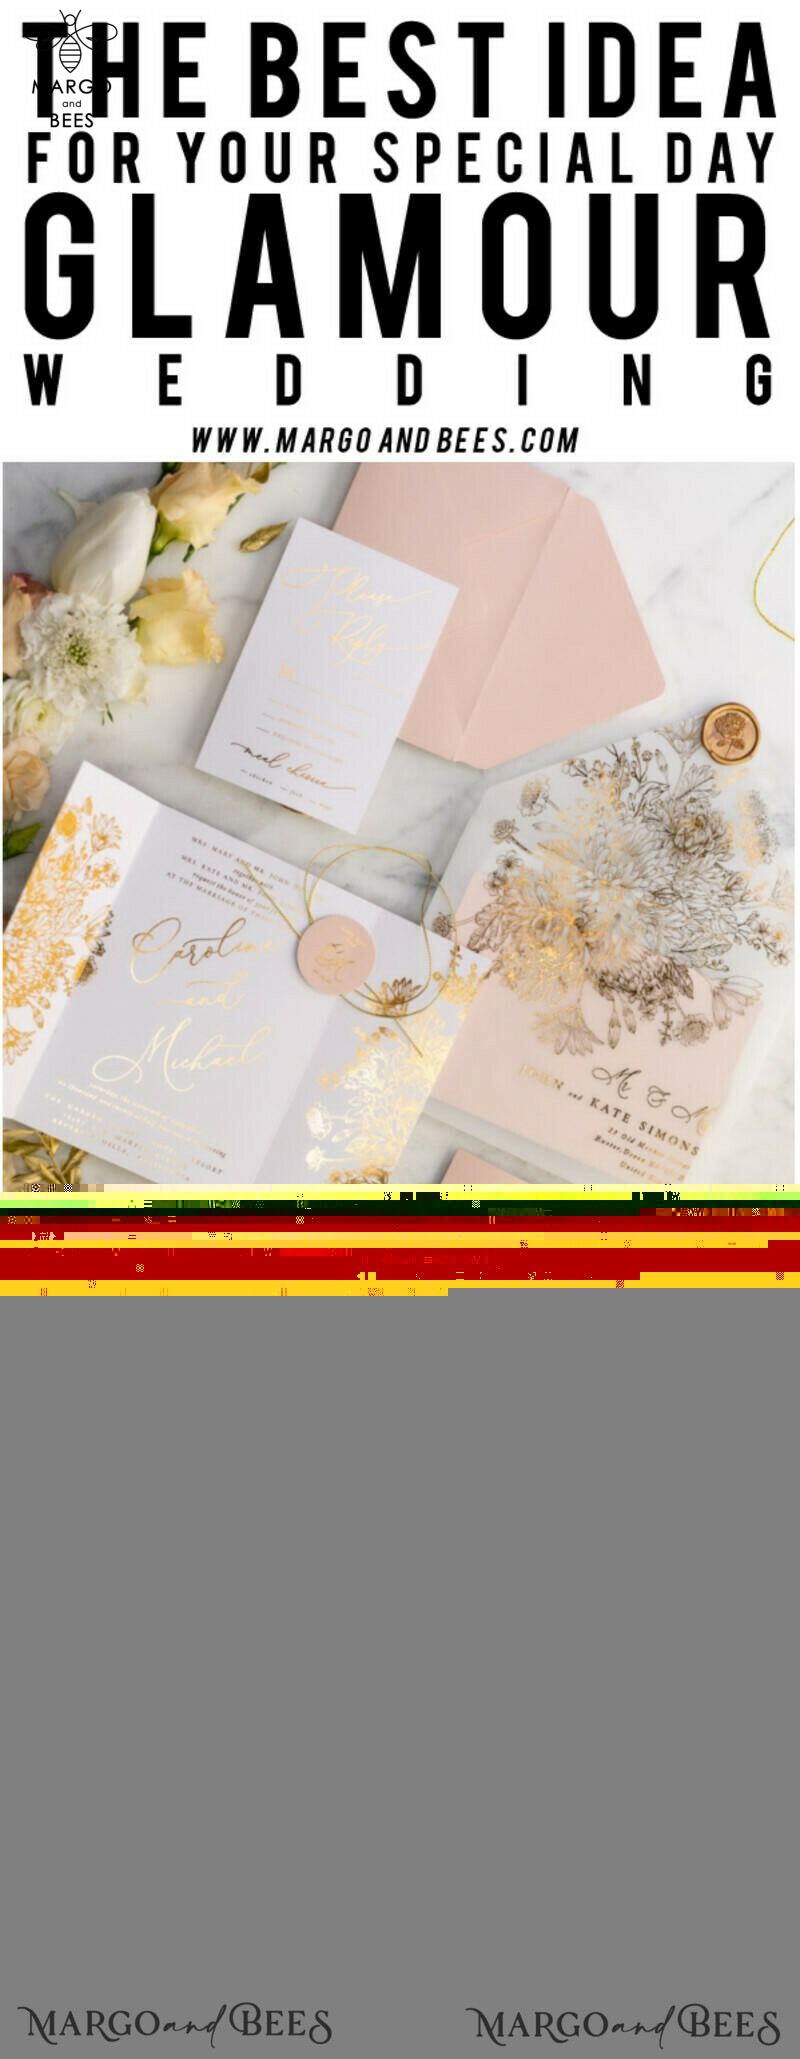 Elegant Luxury Arabic Golden Wedding Invitations with Glamour Gold Foil and Romantic Blush Pink Design: Bespoke Indian Wedding Stationery-39